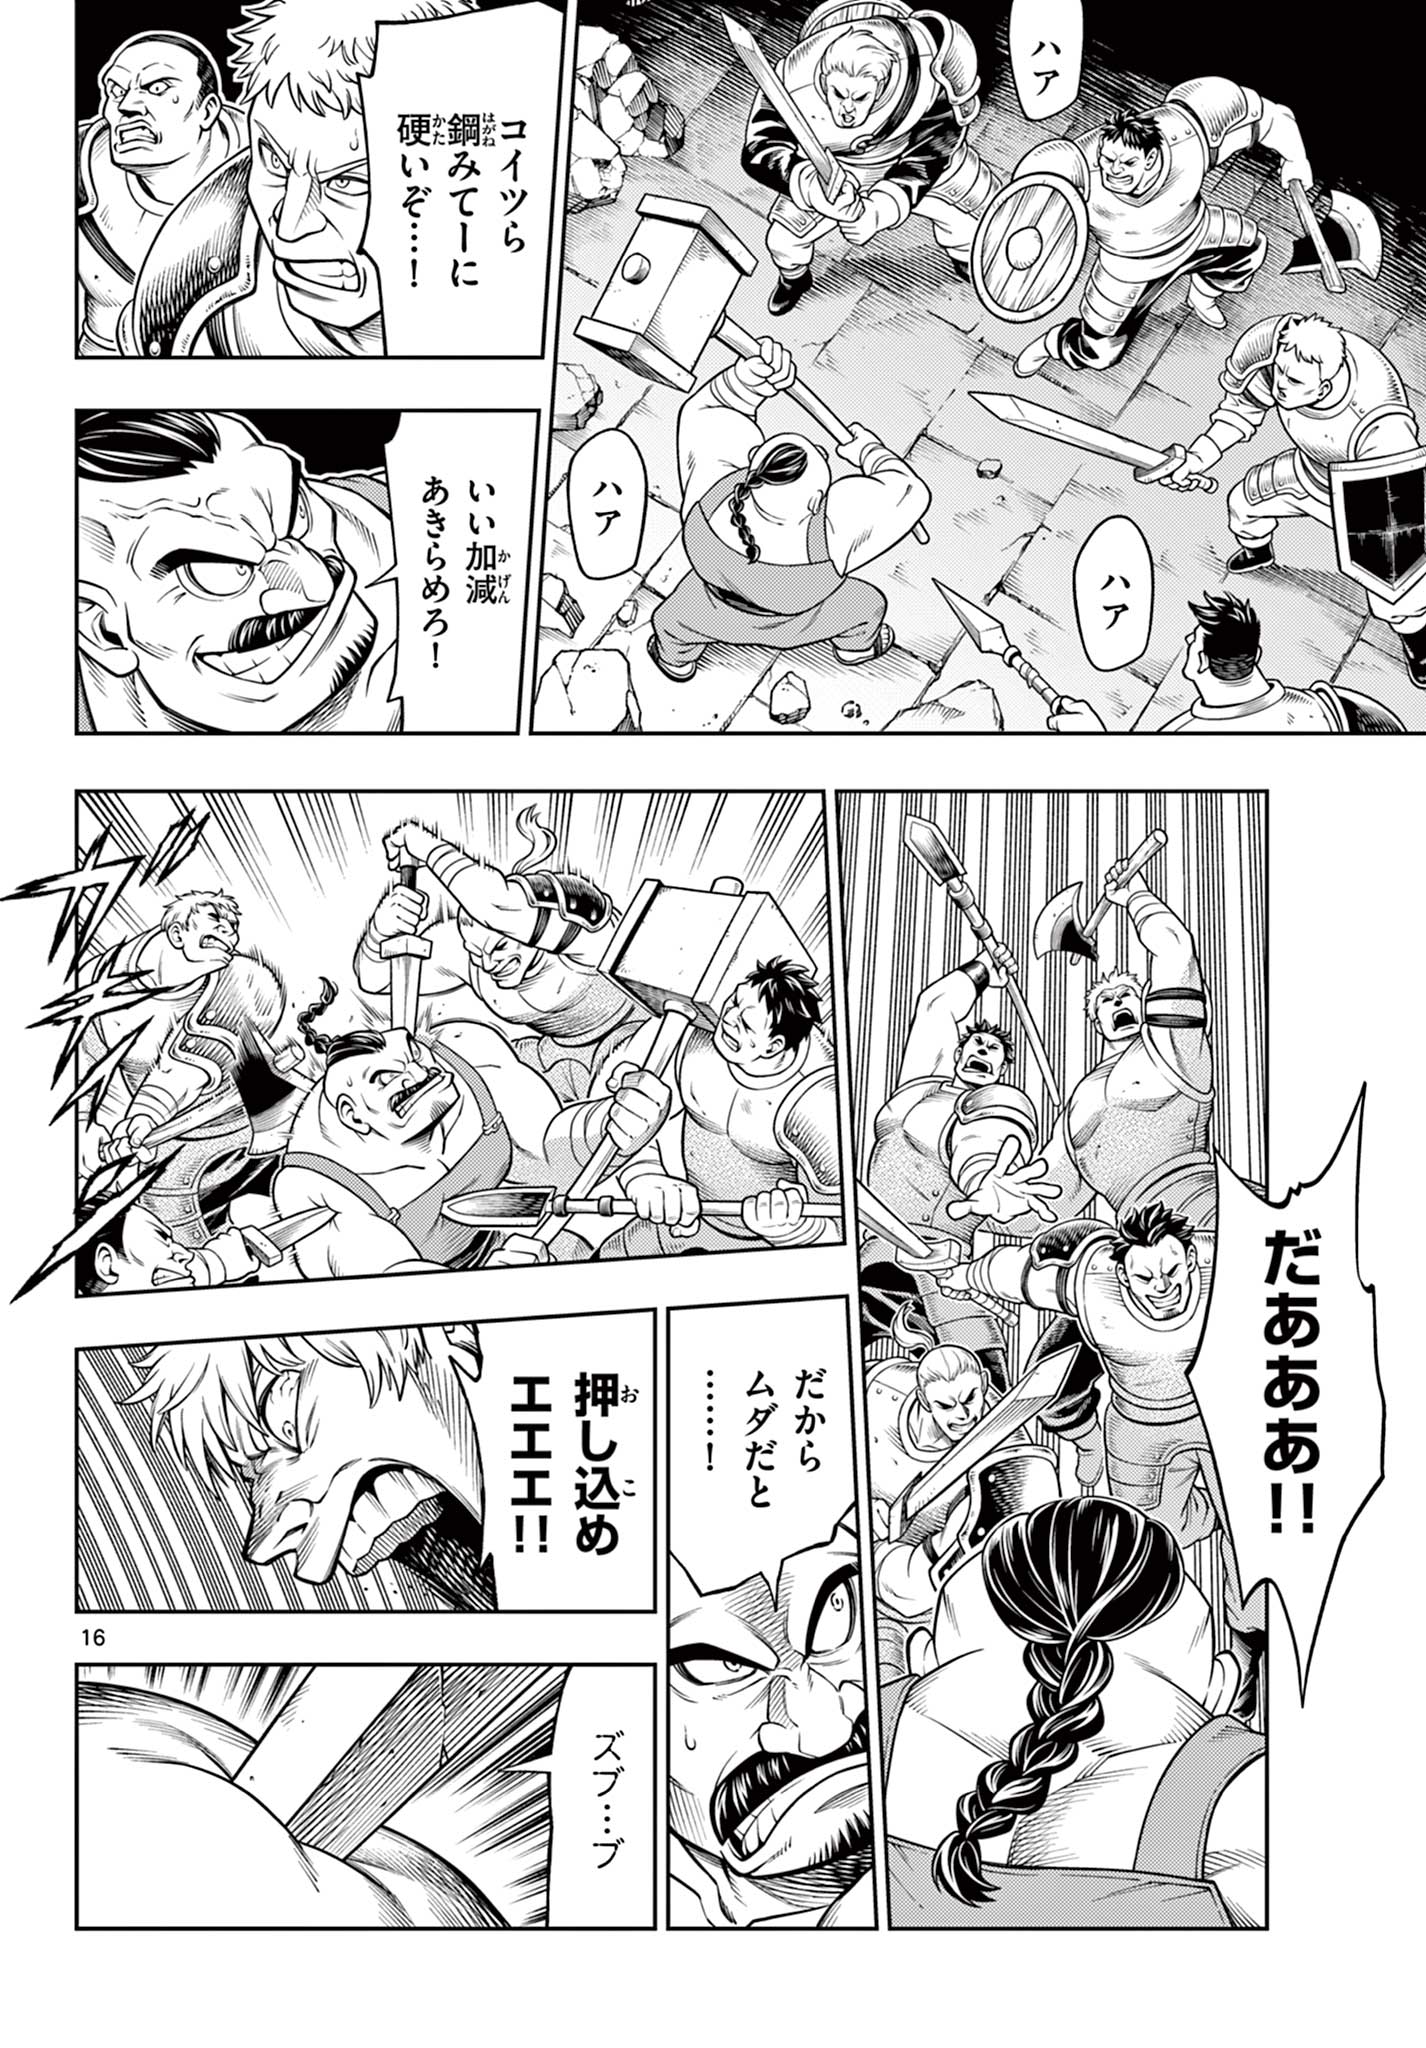 Soara to Mamono no ie - Chapter 28 - Page 16